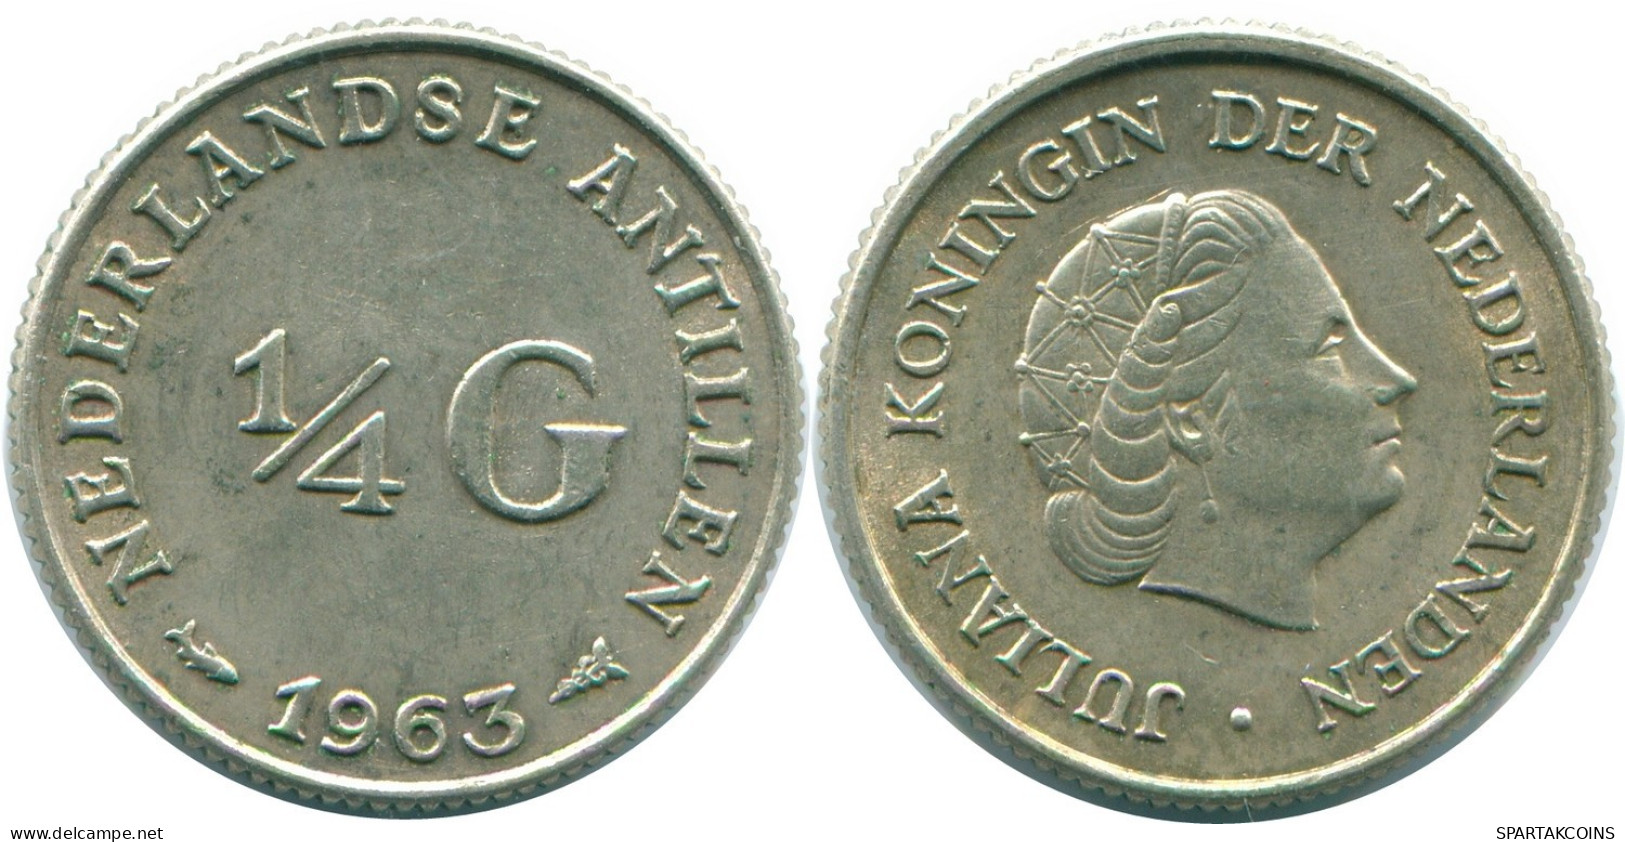 1/4 GULDEN 1963 NETHERLANDS ANTILLES SILVER Colonial Coin #NL11192.4.U.A - Niederländische Antillen